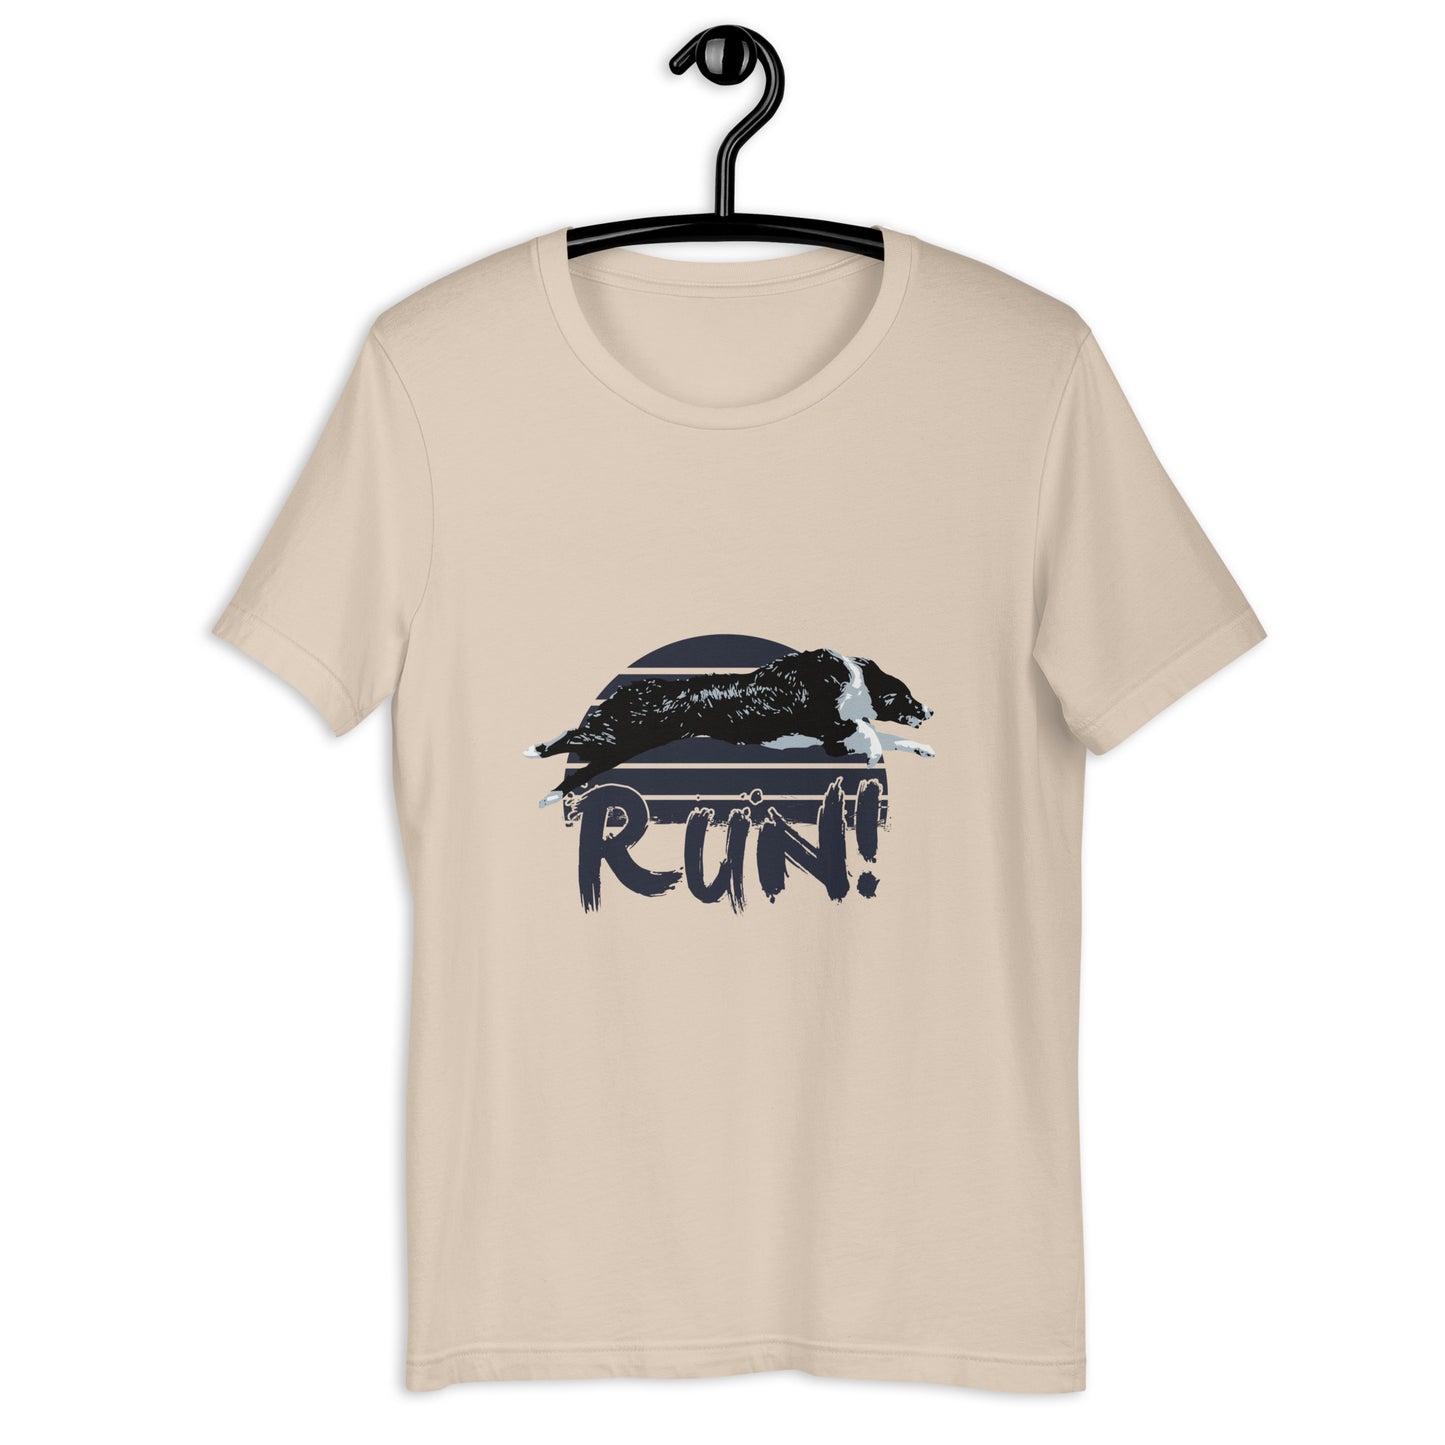 RUN! BORDER COLLIE Unisex t-shirt